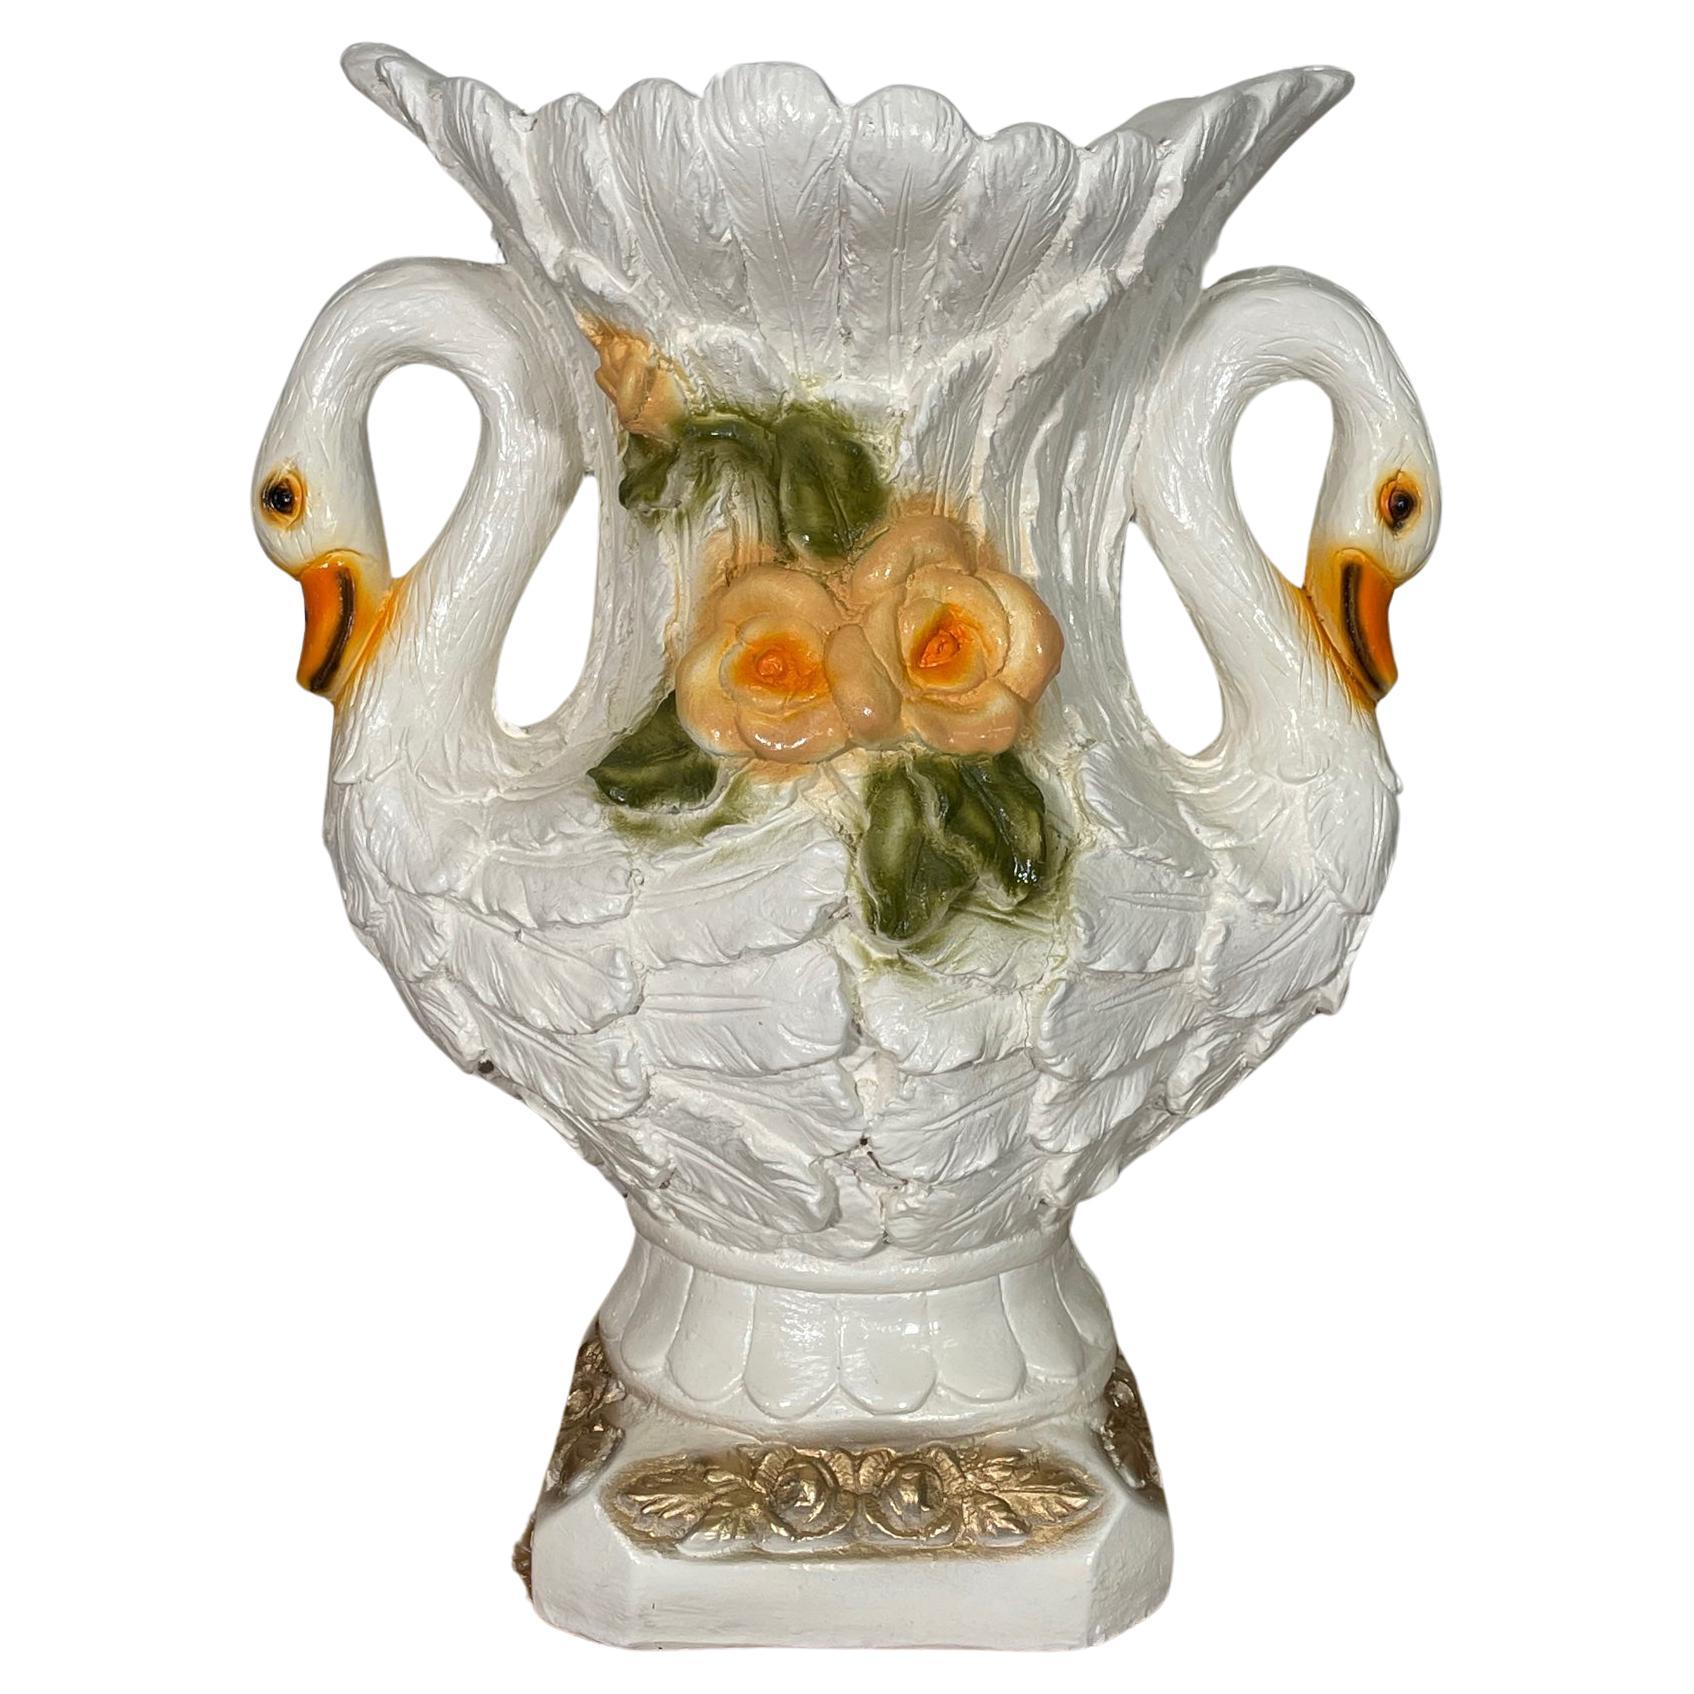 Sculptural Large Double Swan Vase or Planter